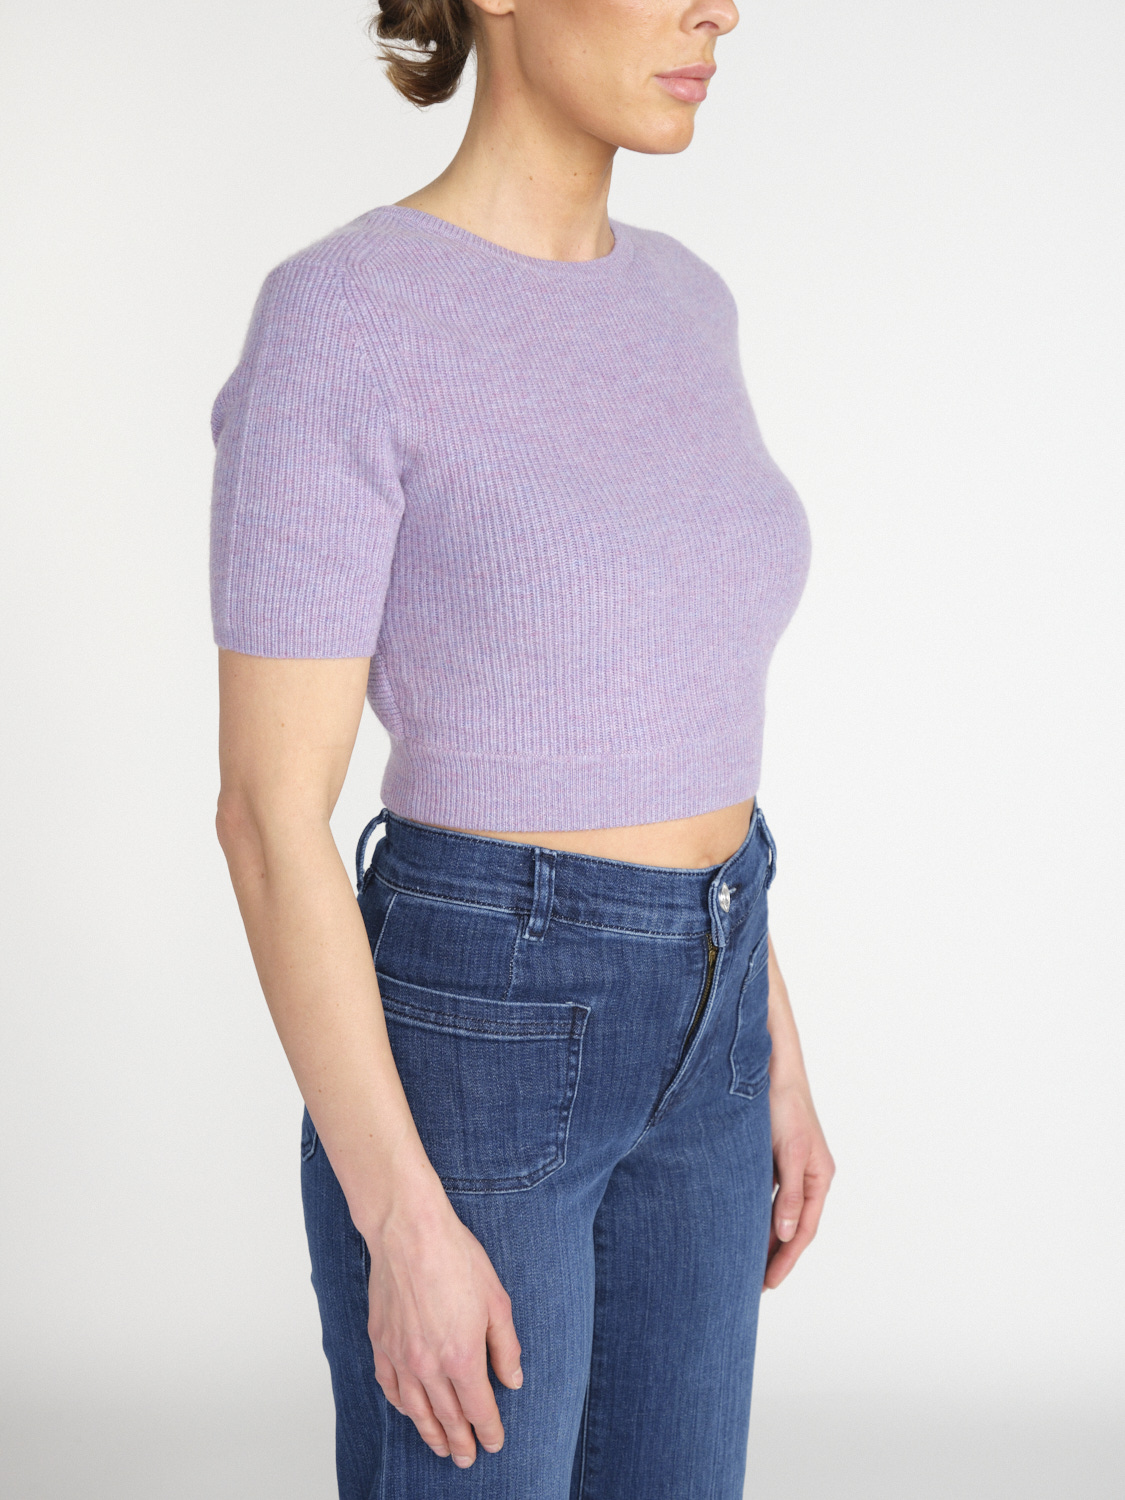 Lisa Yang Josefina – Kurzärmliger Cashmere-Pullover mit rückseitigem Cut-Out   morado XS/S